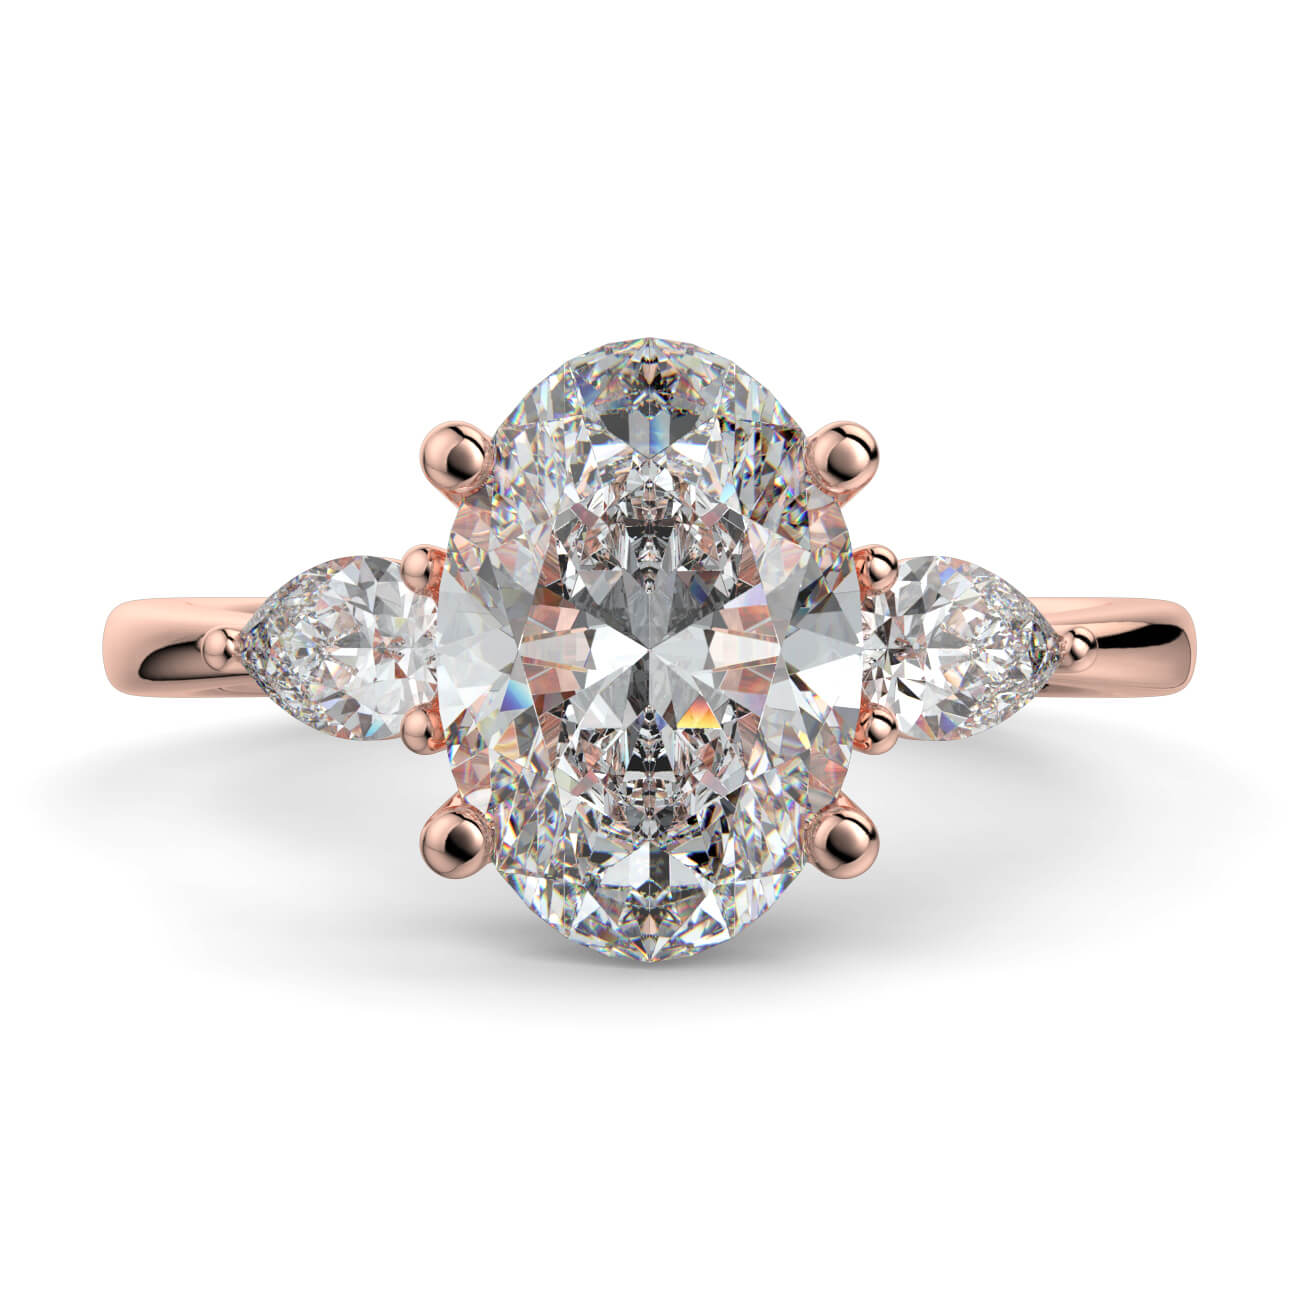 Oval Shape Diamond Ring With Pear Shape Side Diamonds In 18k Rose Gold – Australian Diamond Network